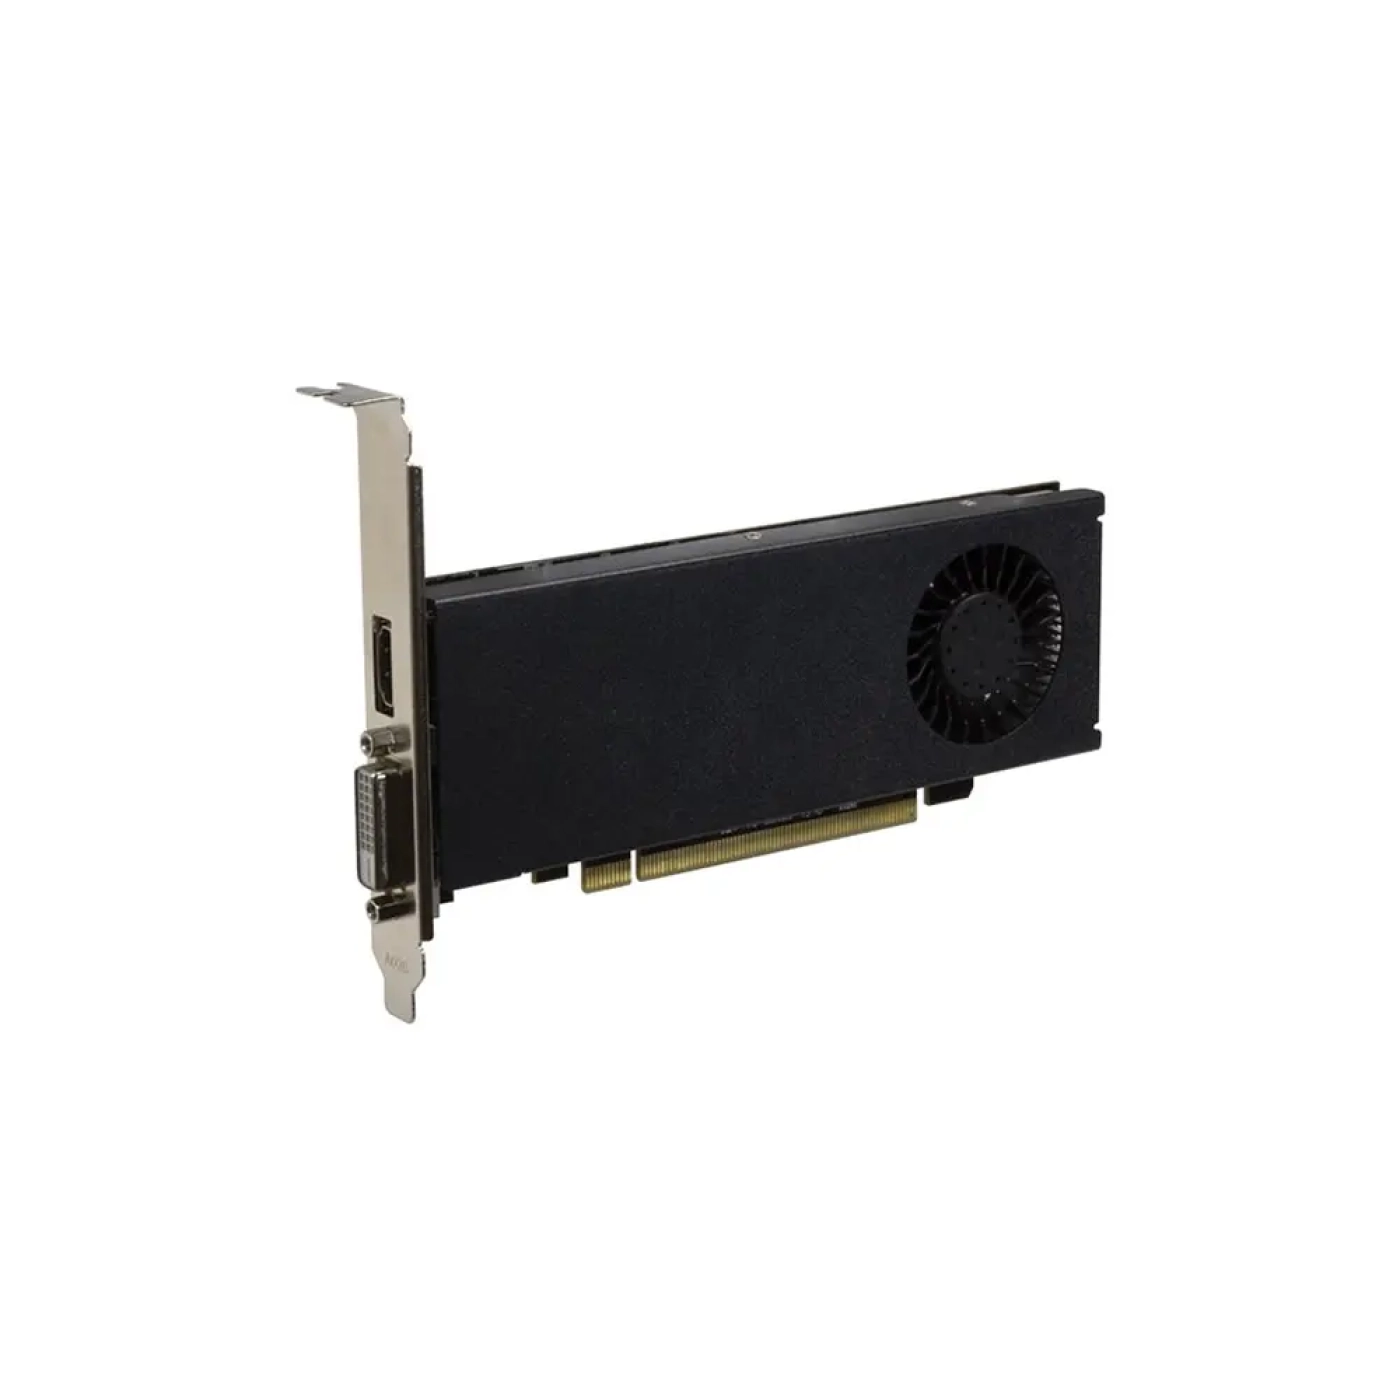 Купить Видеокарта PowerColor Radeon RX-550 2GB GDDR5 - фото 2